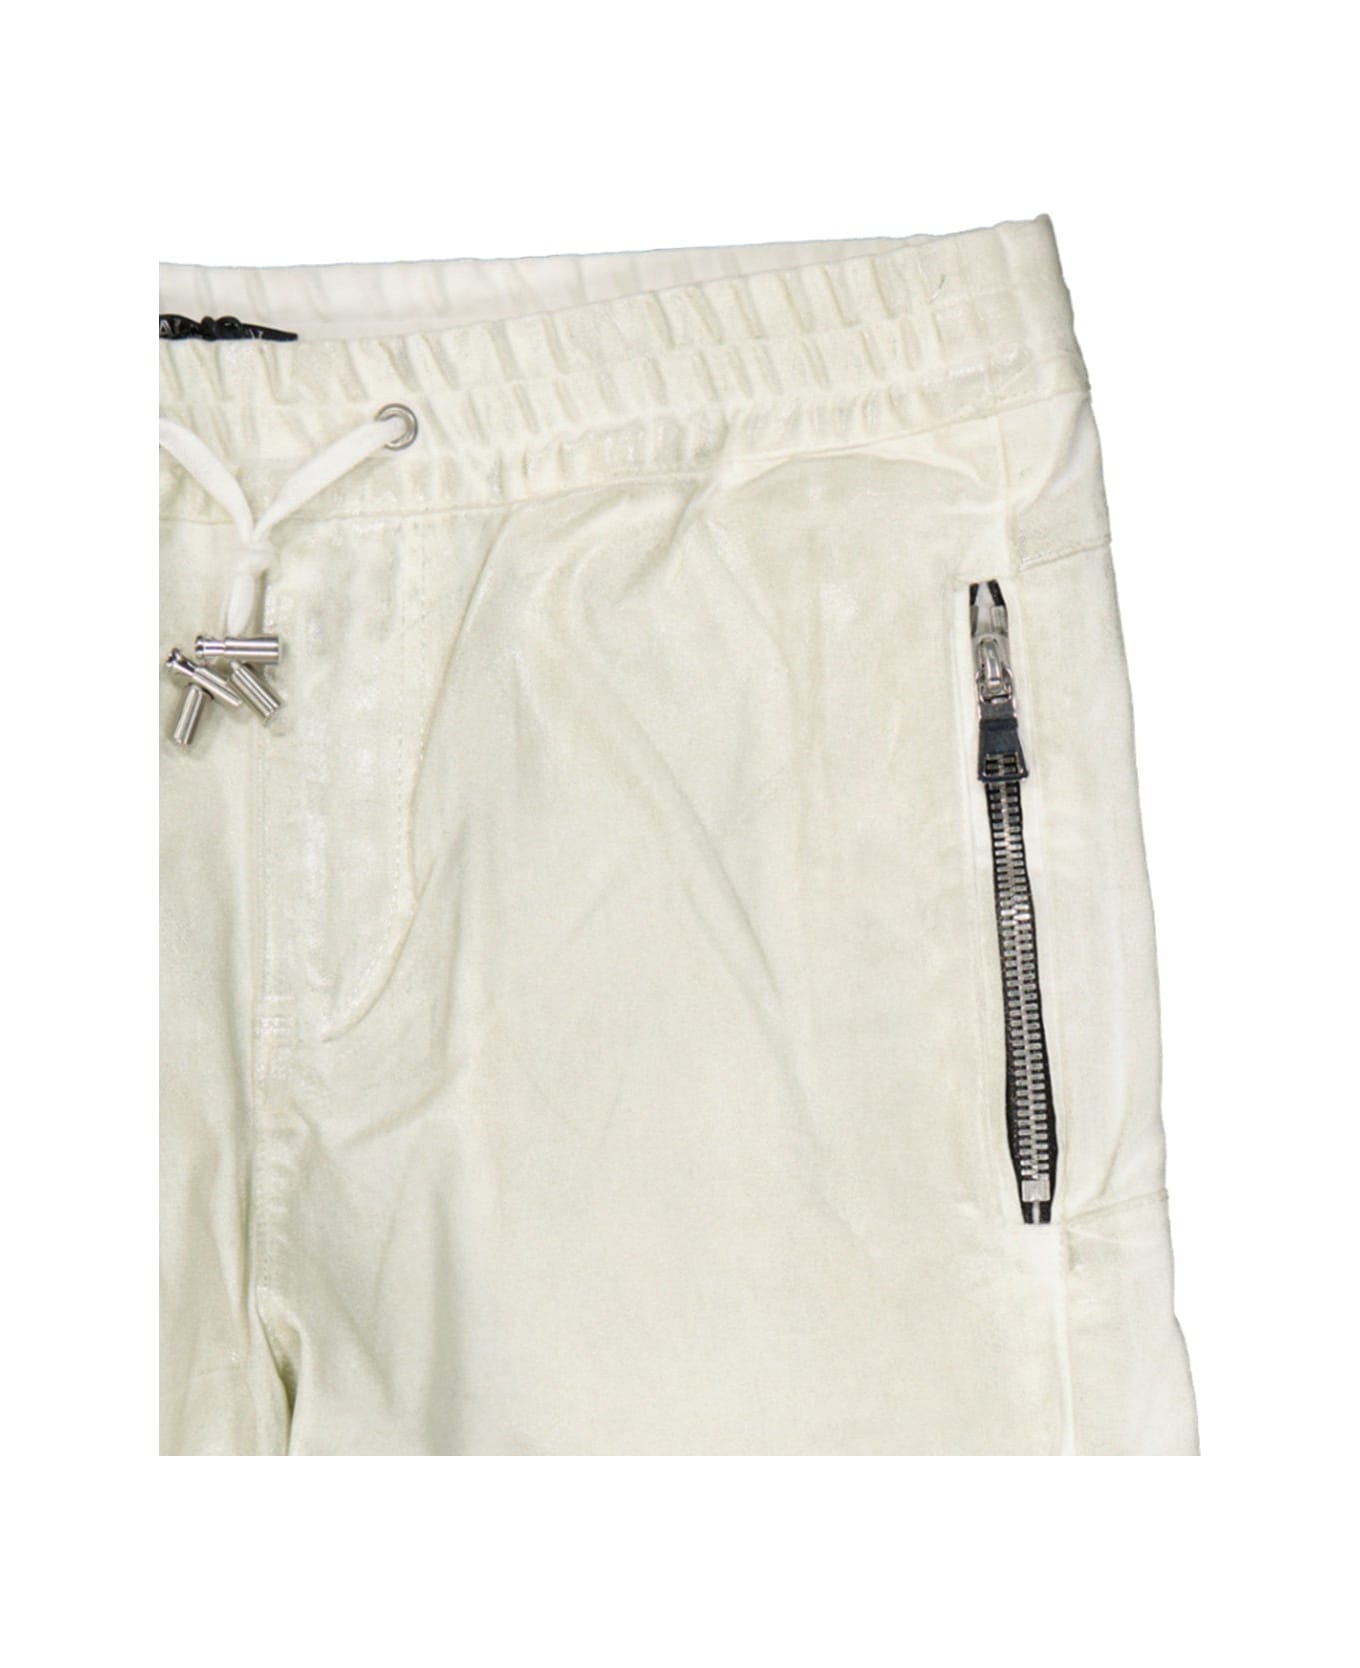 Balmain Cotton Glitter Pants - White